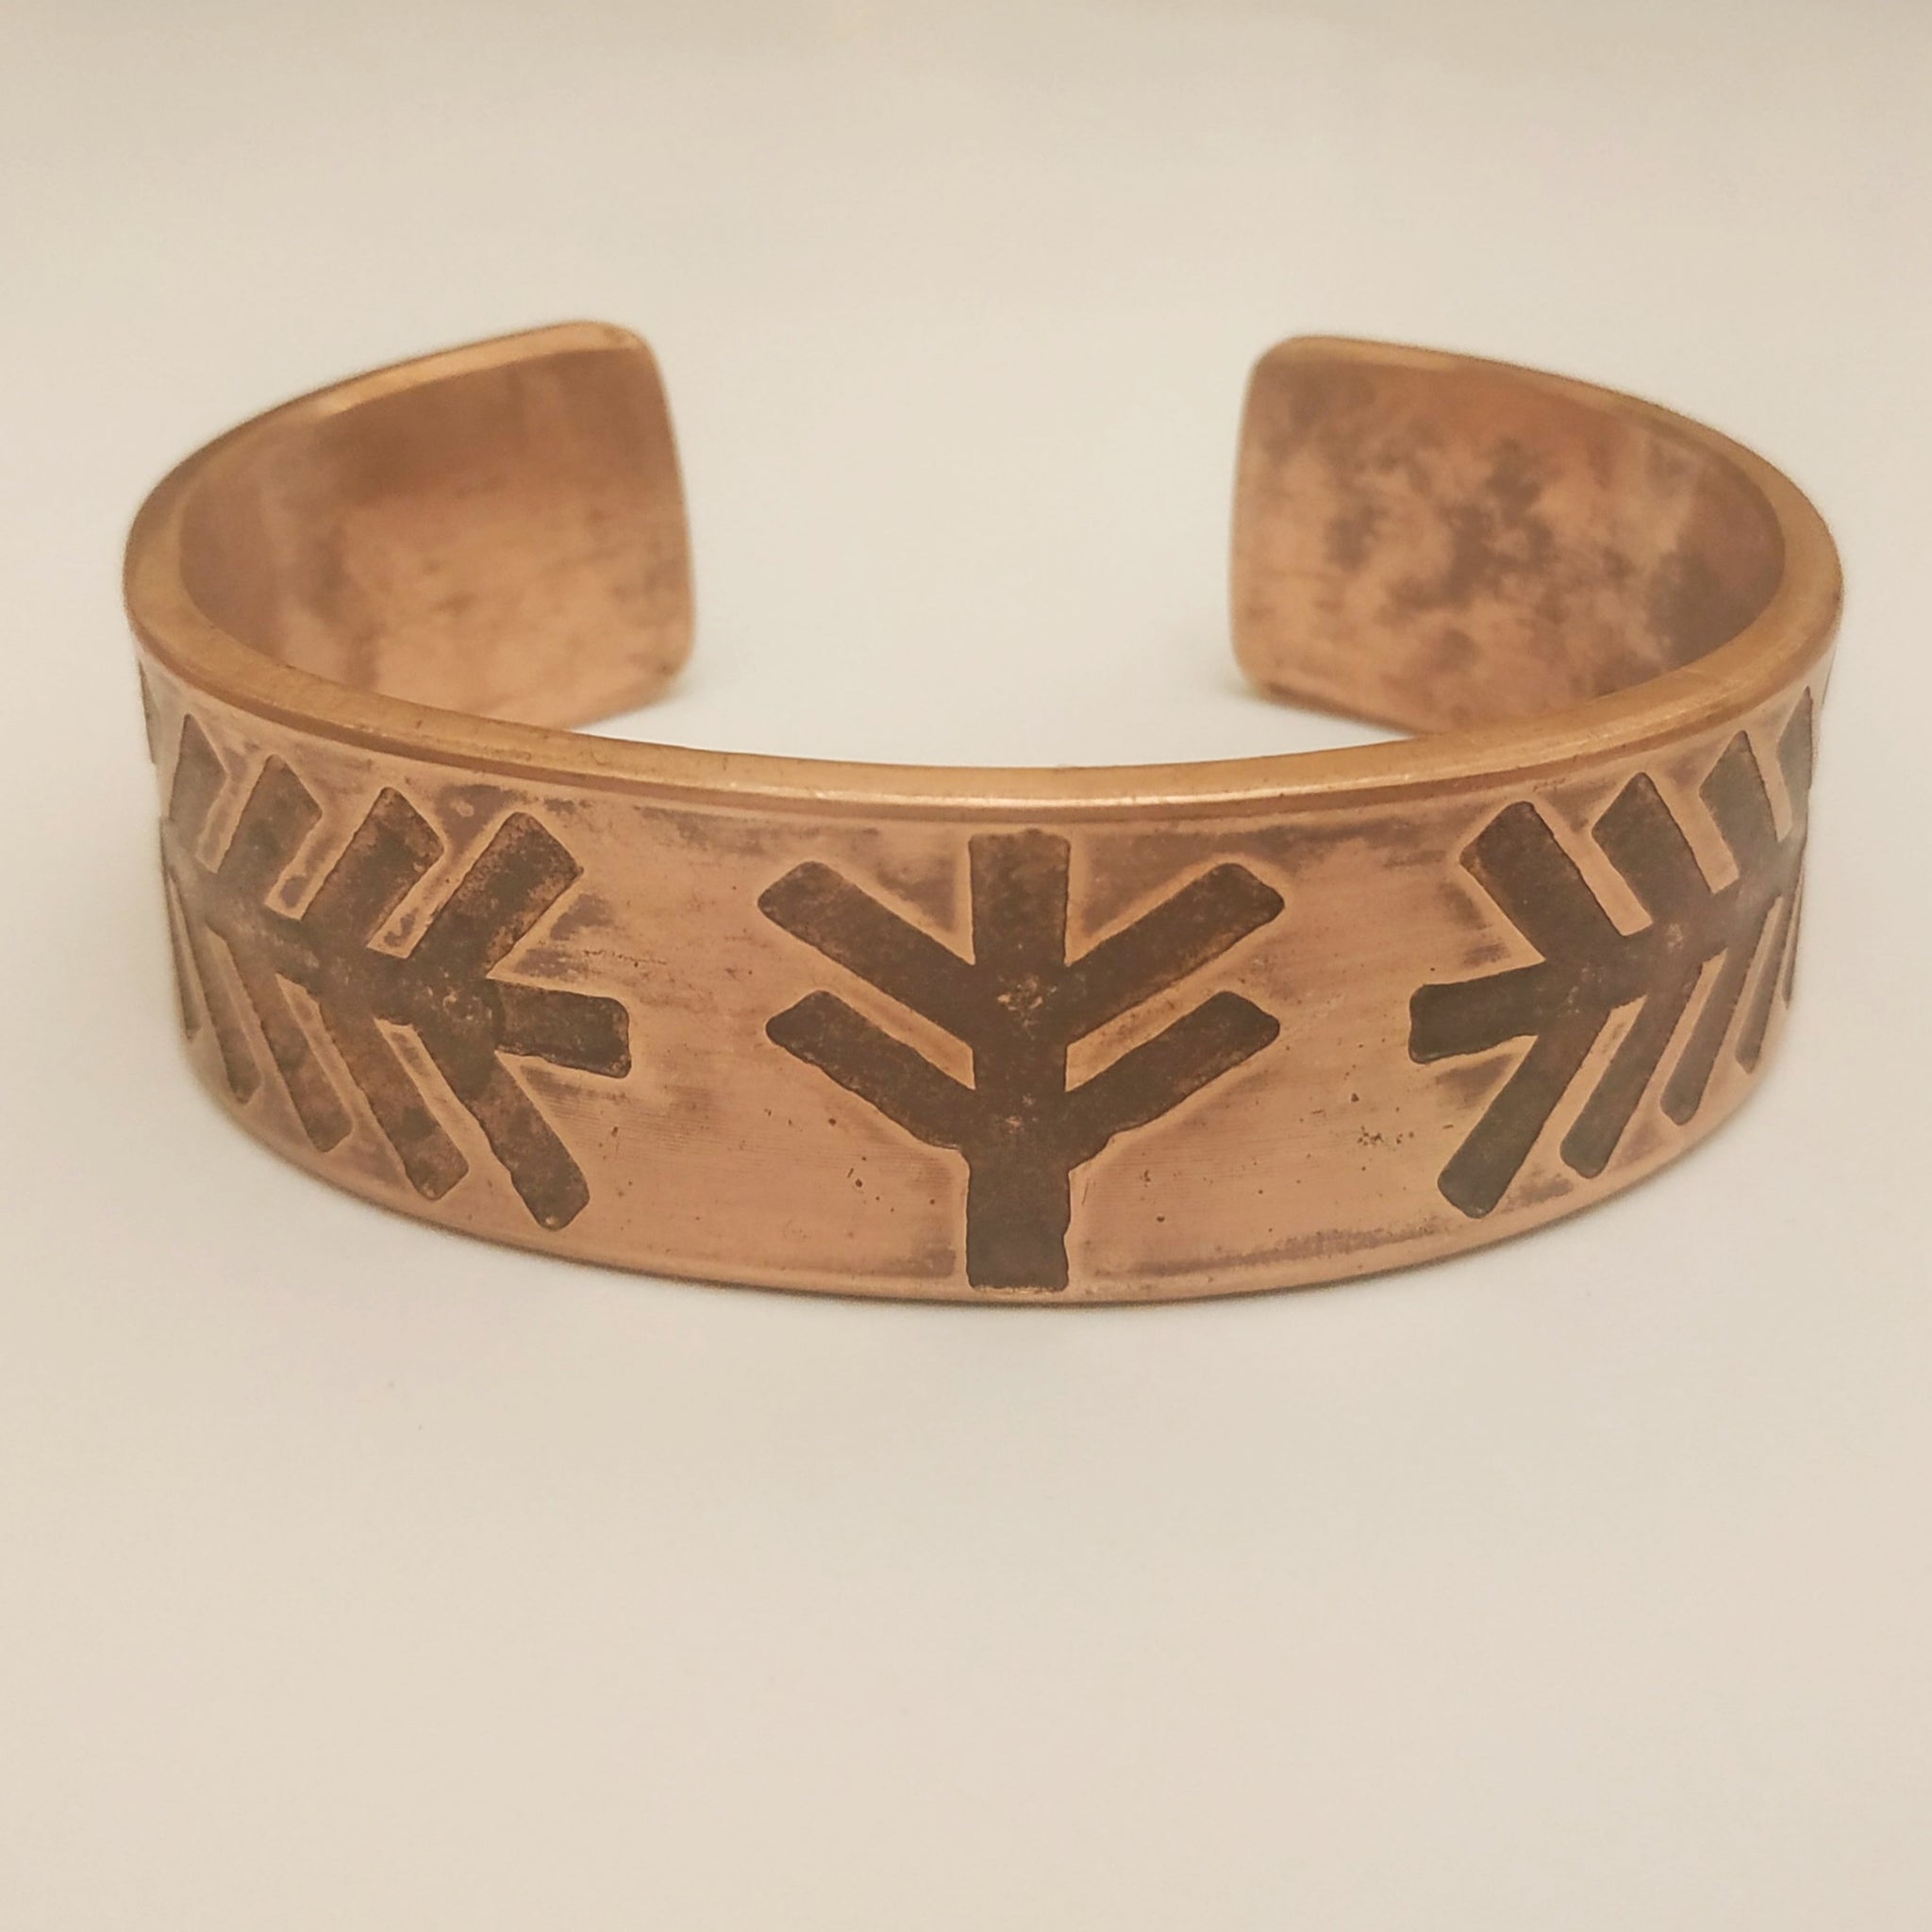 Tyr Runic Armband - Viking Tiwaz and Algiz Victory and Protection Runes Armband Cuff Bracelet